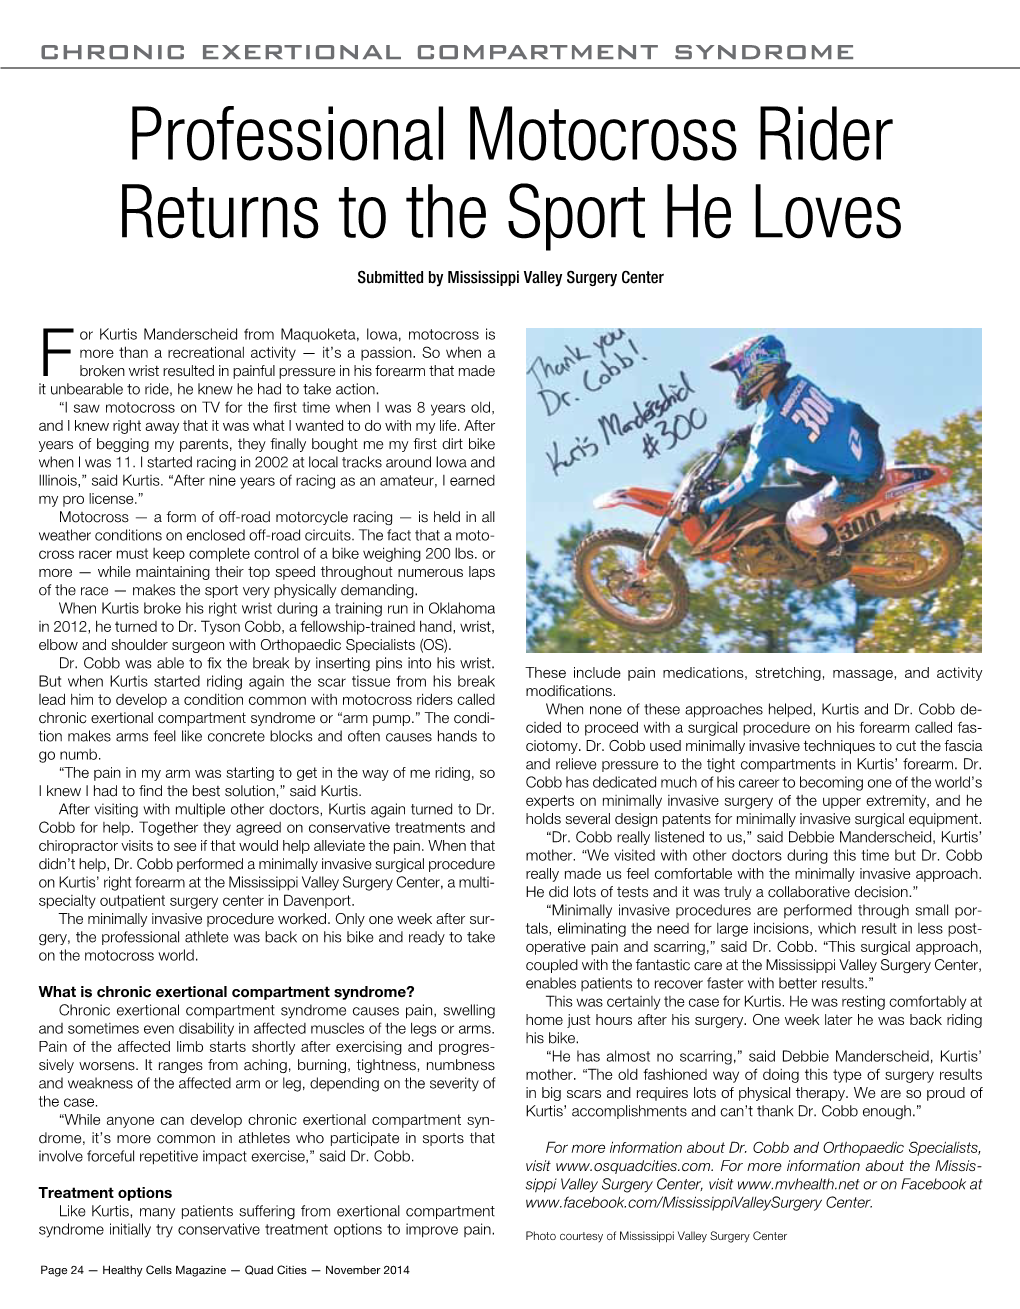 Professional Motocross Rider Returns to the Sport He Loves